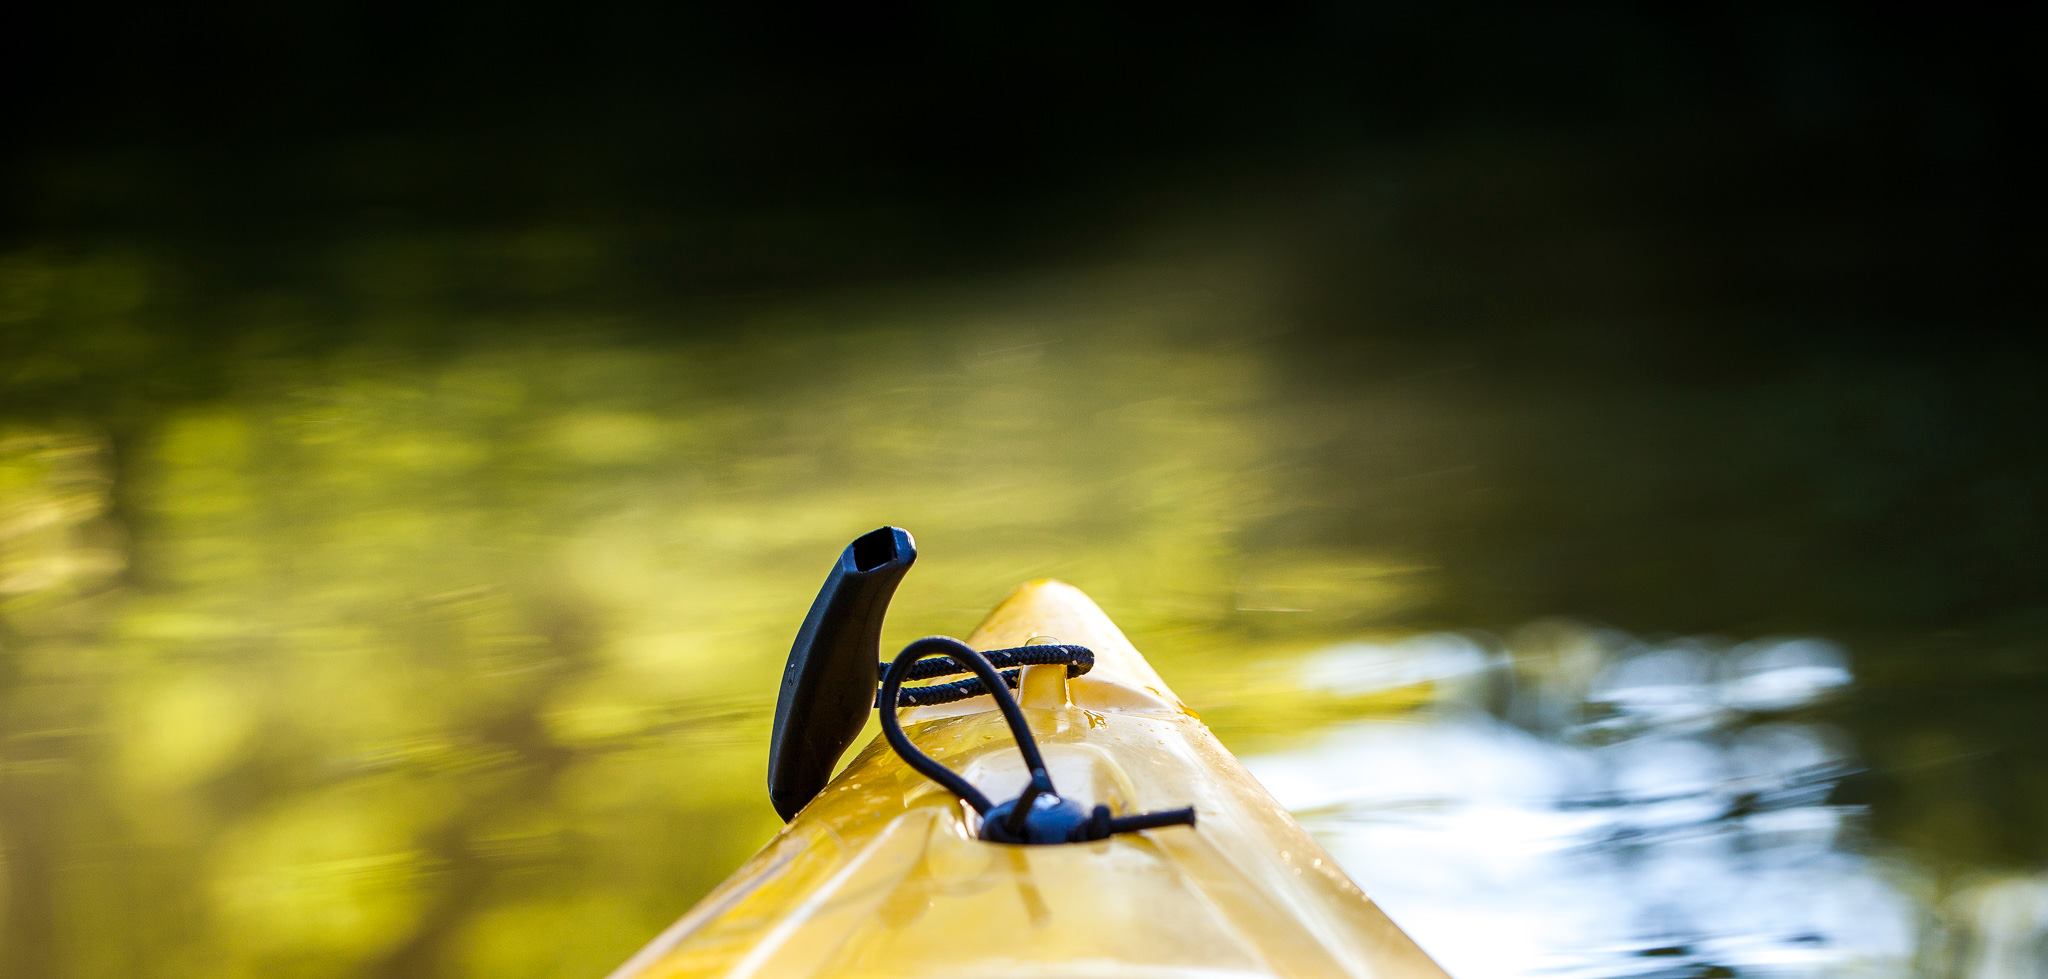 Tips for improving GoPro videos when kayaking or canoeing